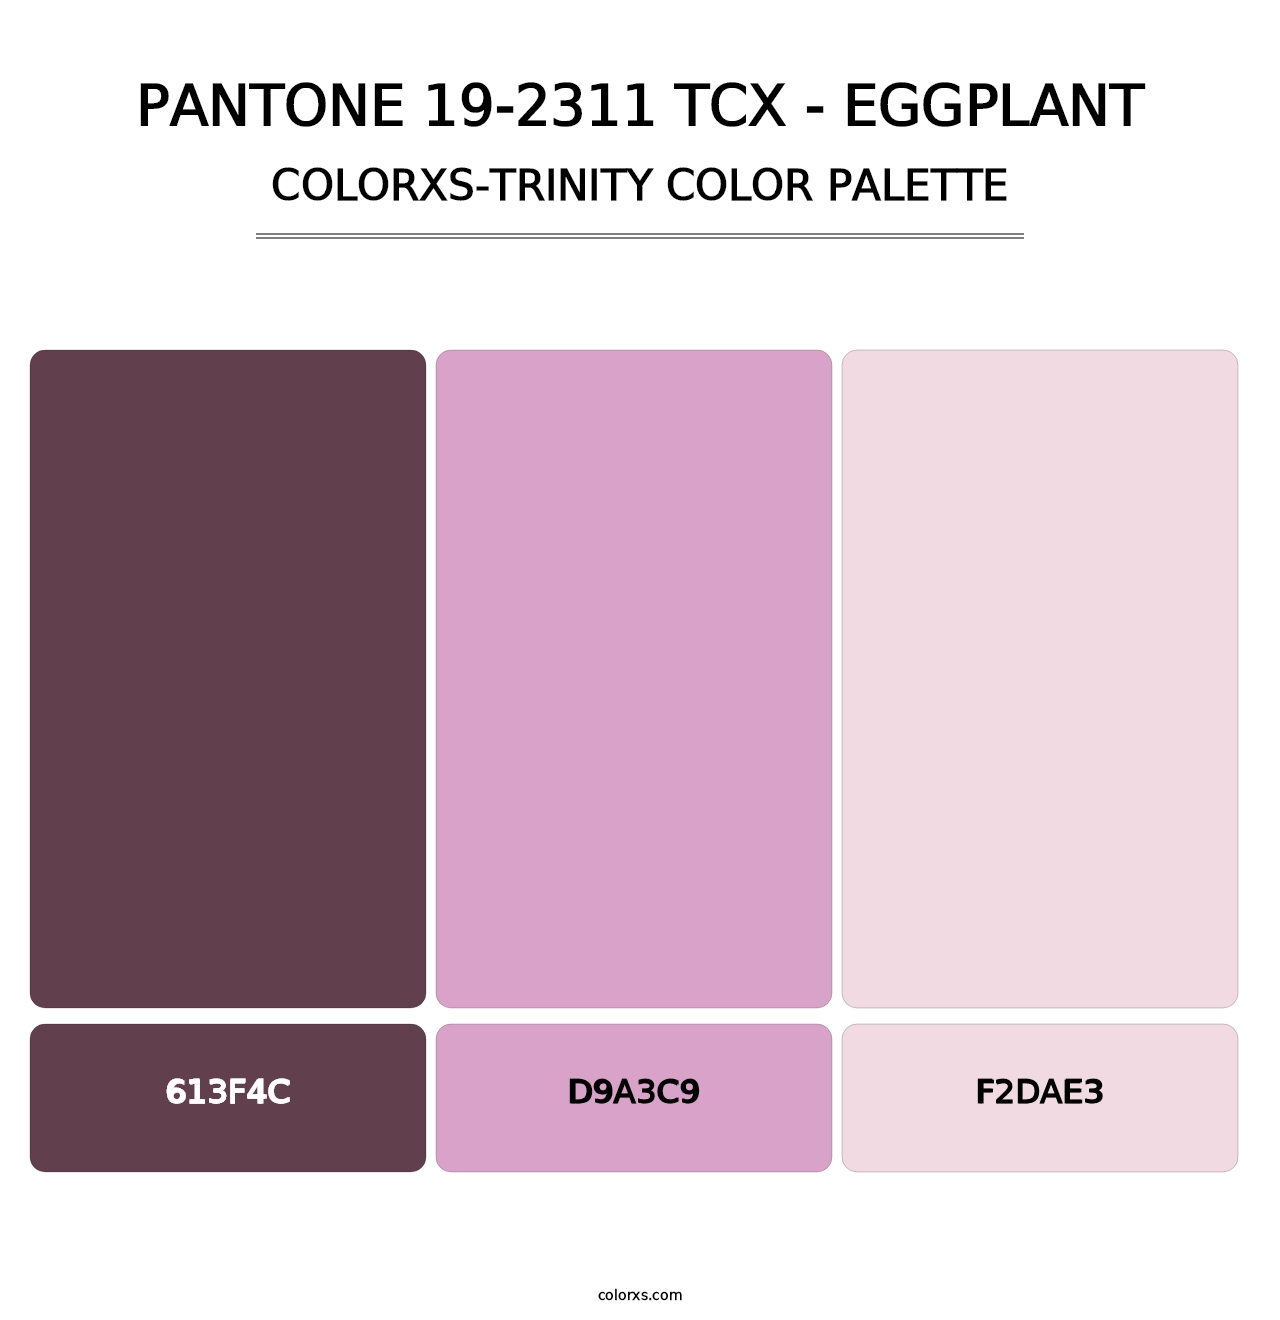 PANTONE 19-2311 TCX - Eggplant - Colorxs Trinity Palette